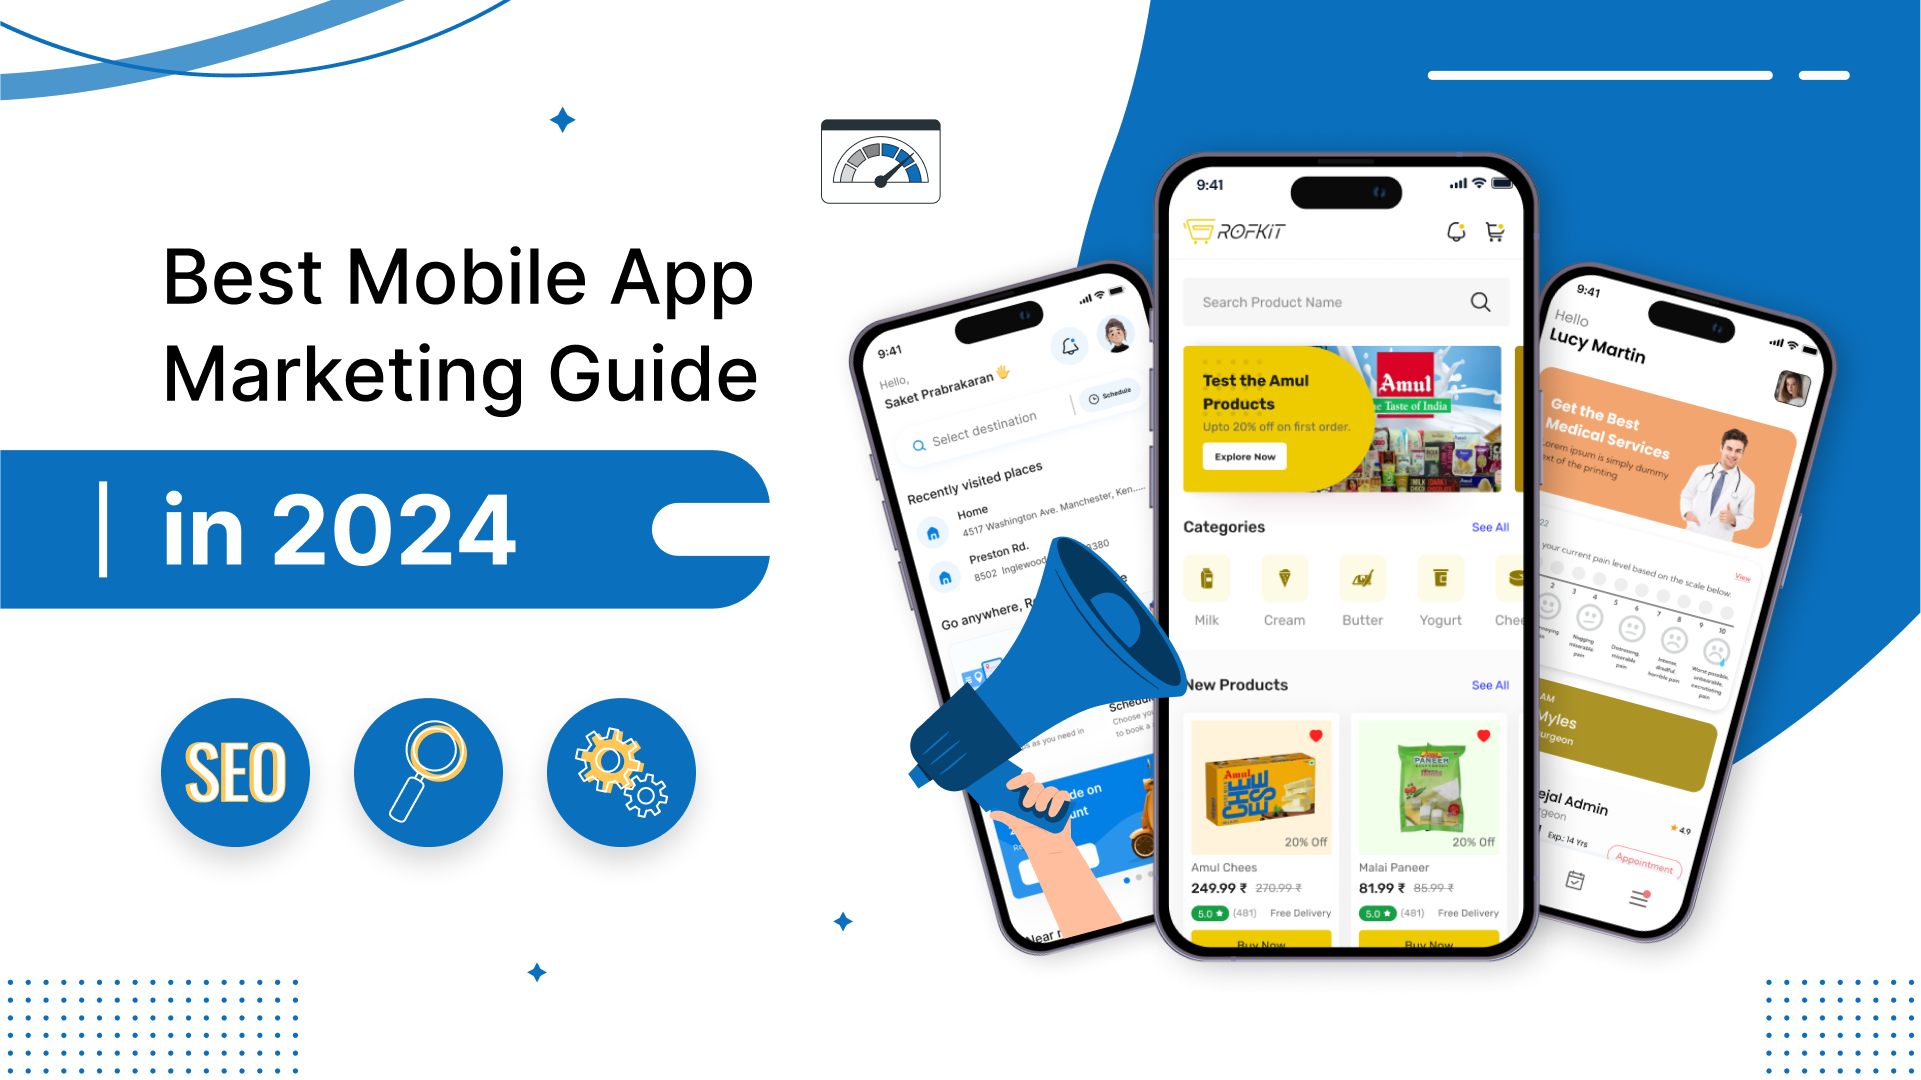 Best Mobile App Marketing Guide in 2024